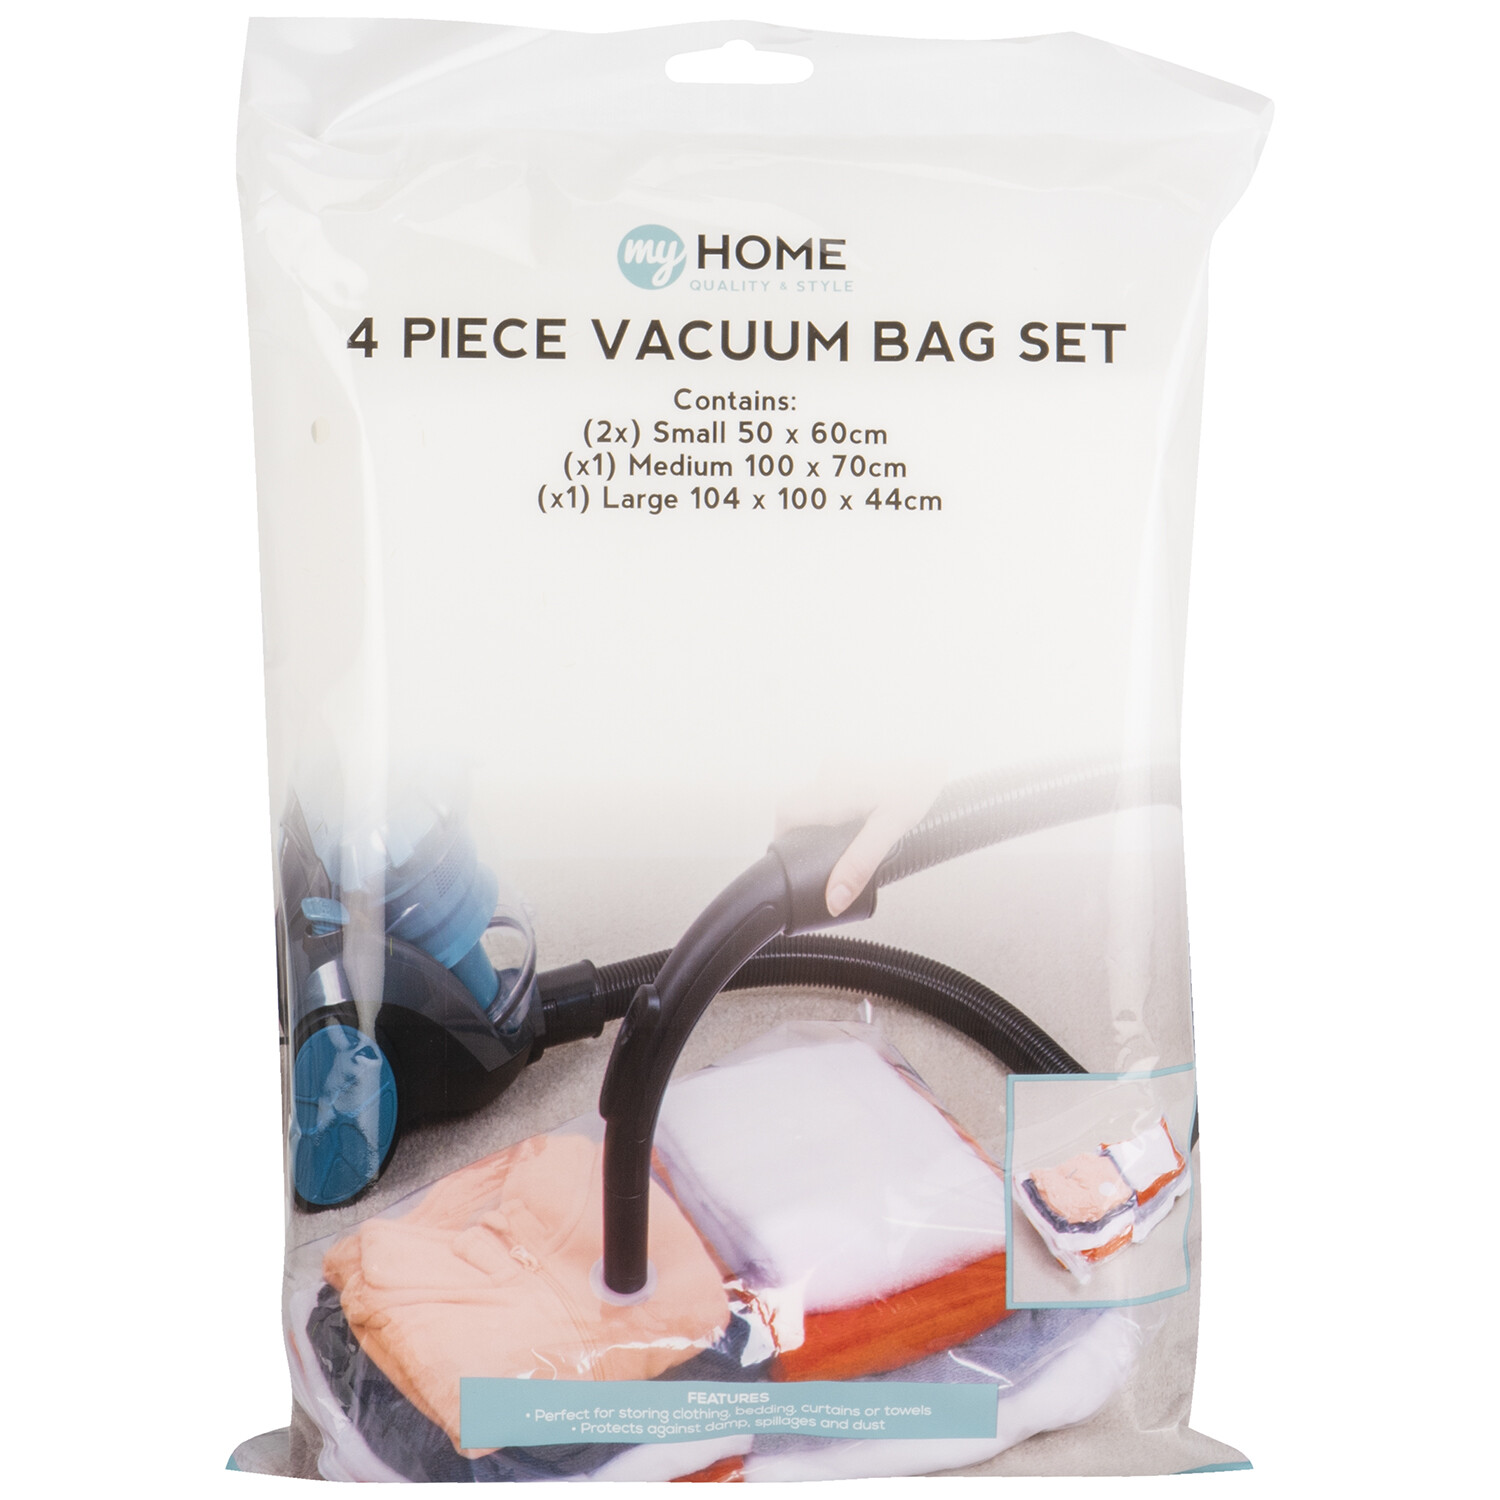 My Home Vacuum Bag Set 4 Piece Image